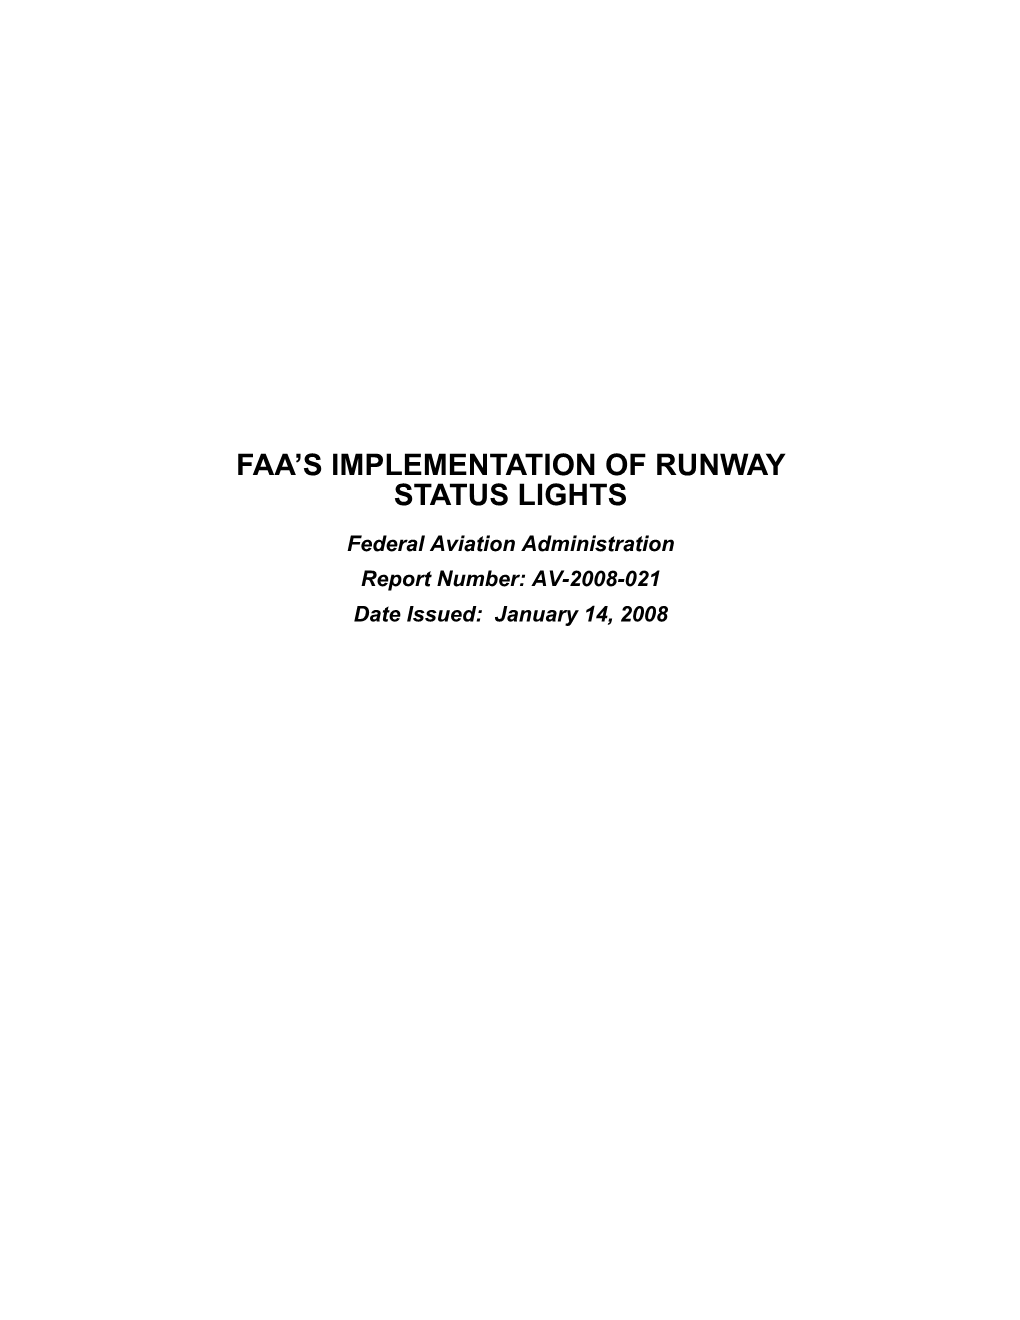 FAA's Implementation of Runway Status Lights